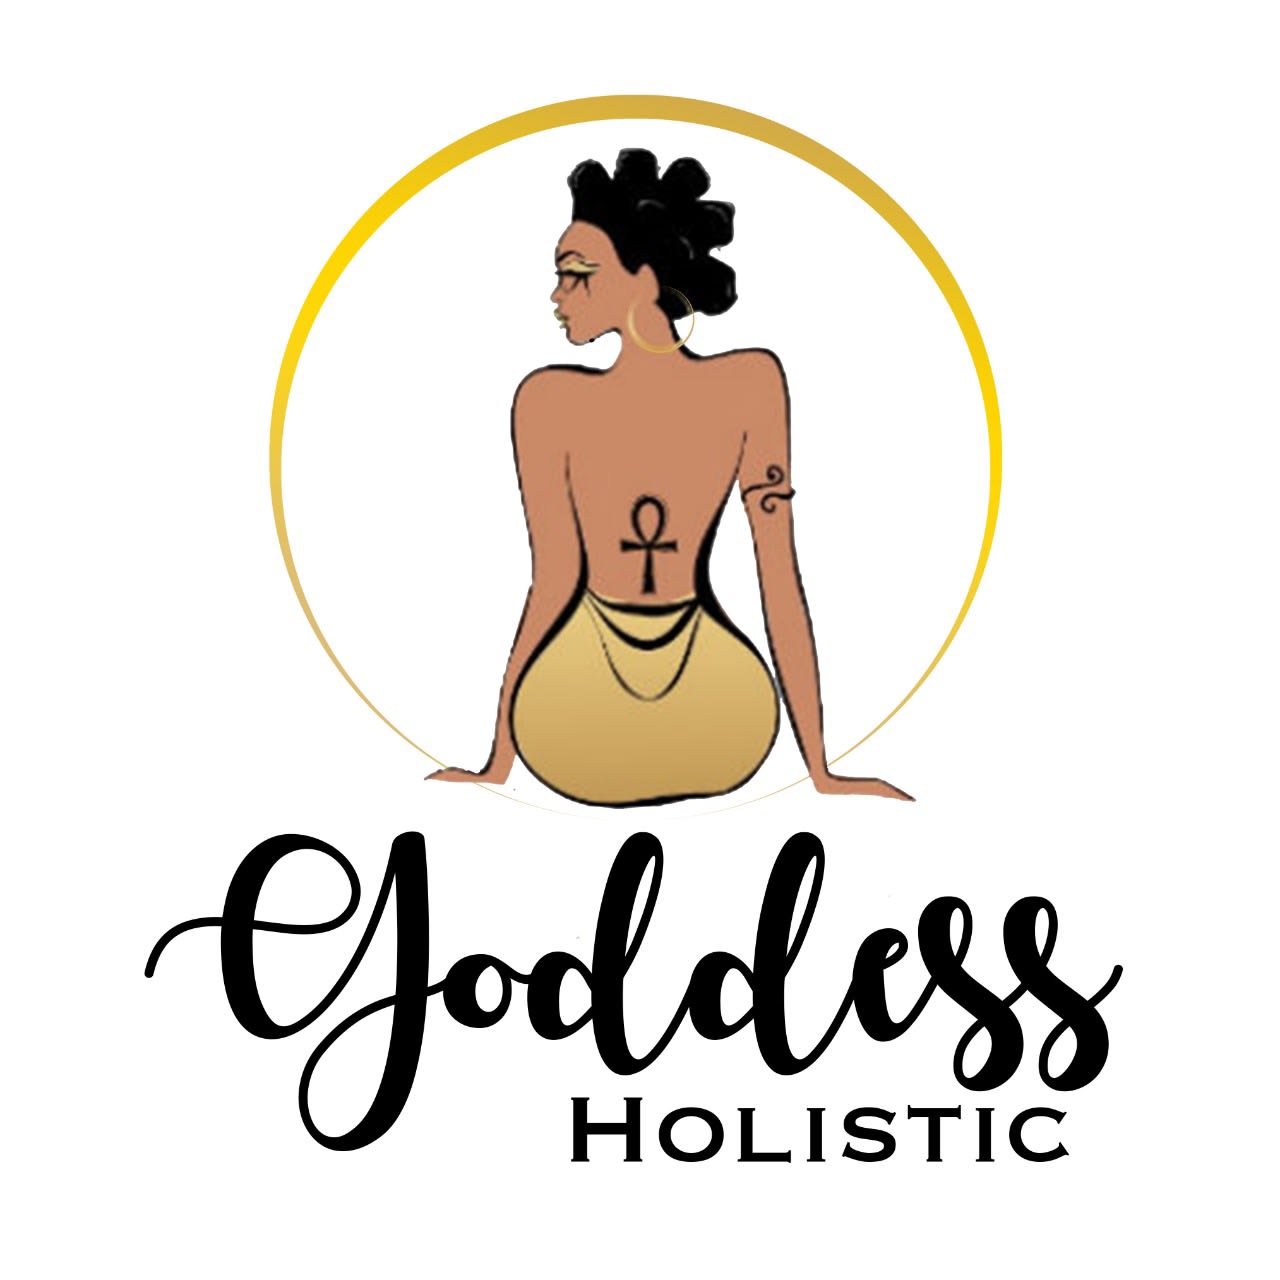 Goddess Holistic